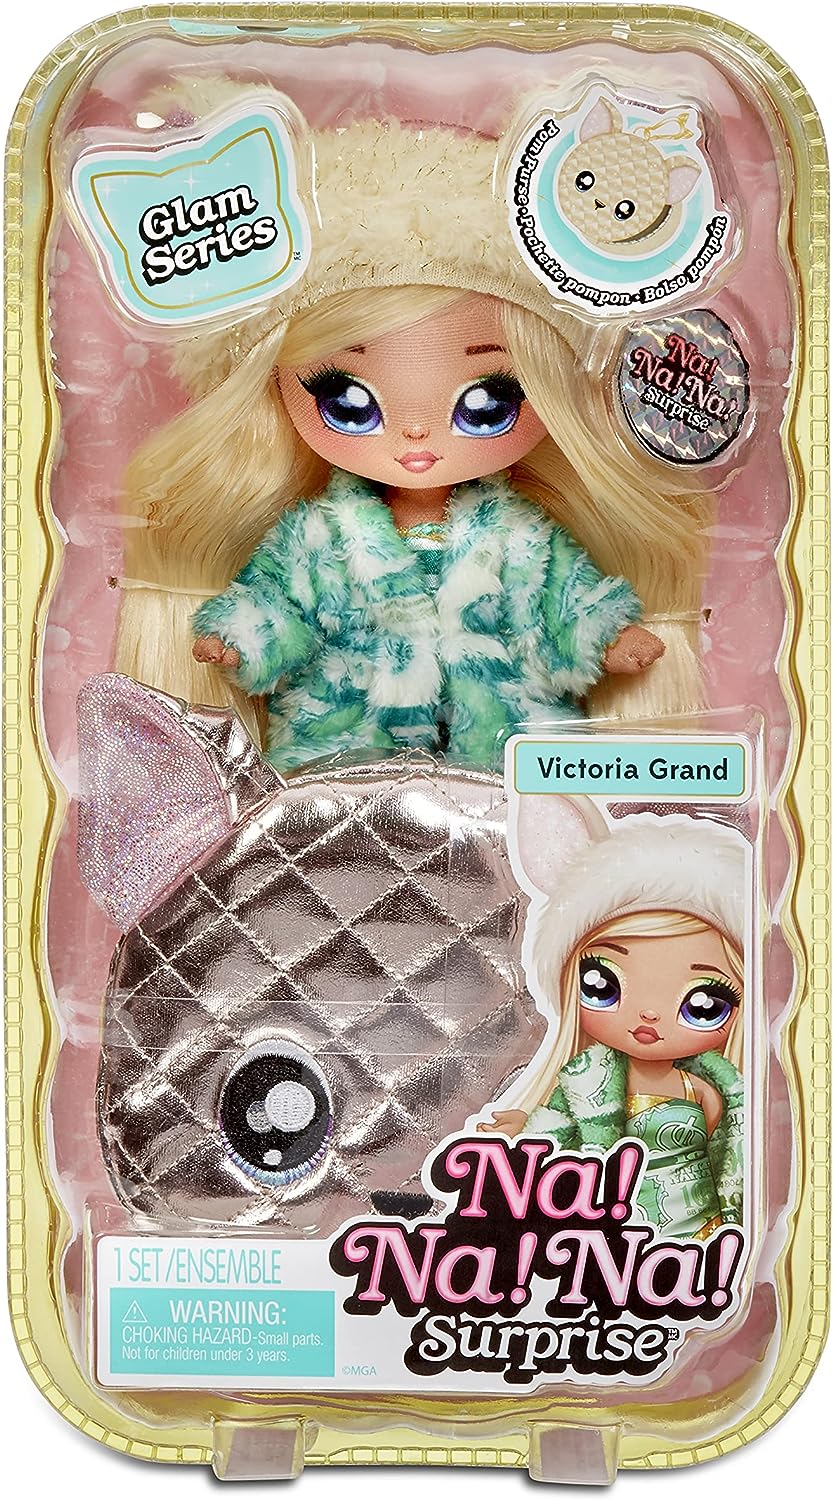 Na! Na! Na! Surprise 2-in-1 Fashion Doll and Metallic Purse Glam Series Victoria Grand - Open Box